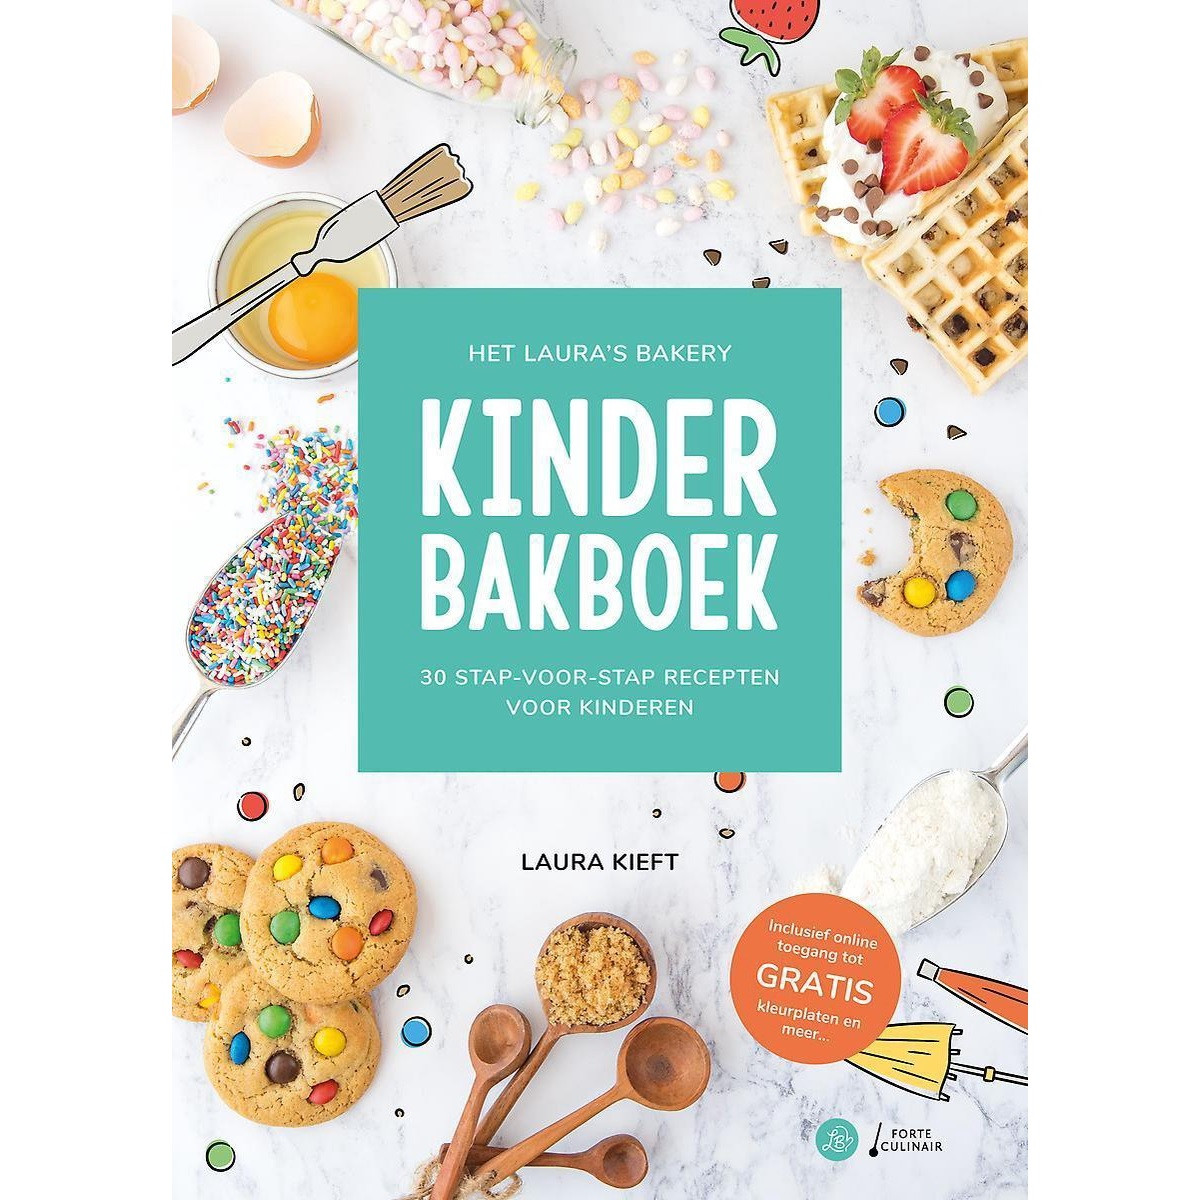 Book: Laura's Bakery children's baking book